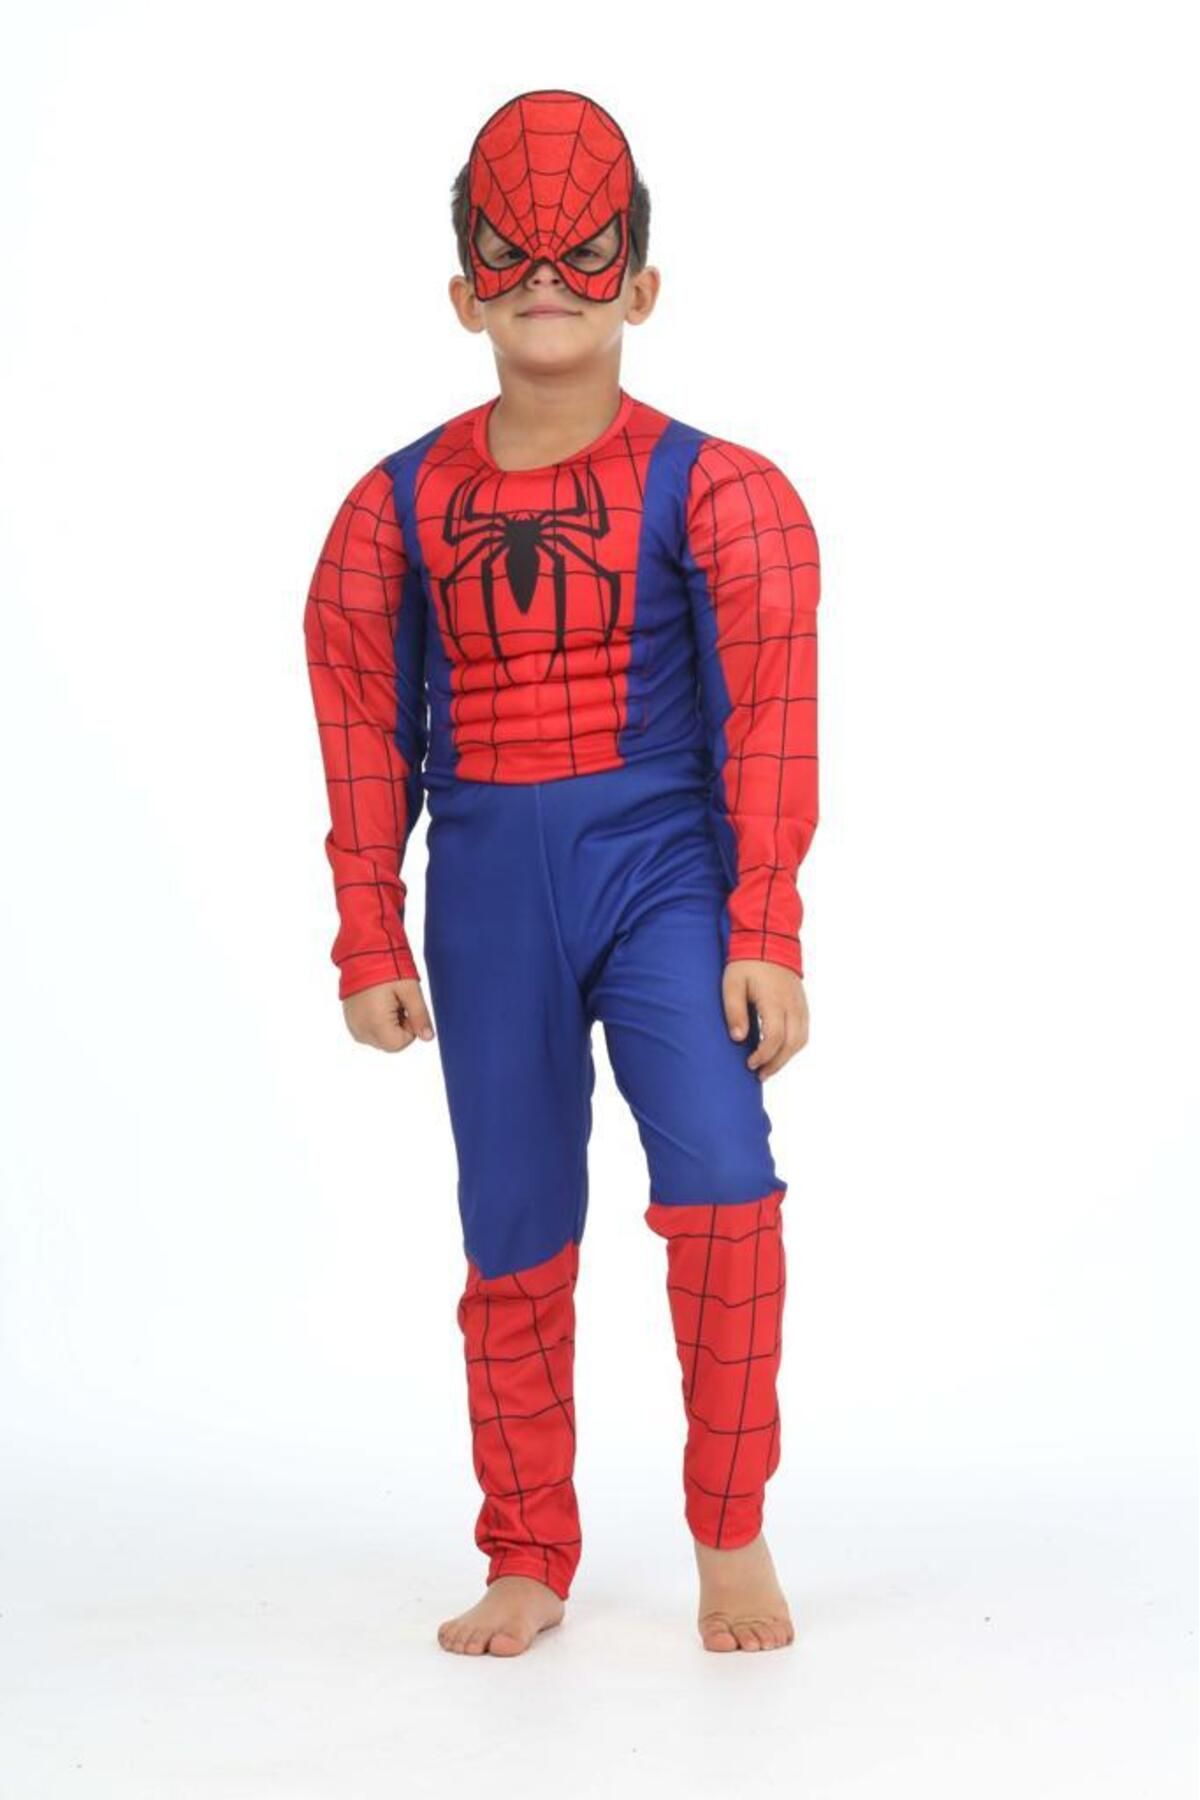 GADGET GEAR Örümcek Adam / SpiderMan Kaslı Kostüm Kırmızı